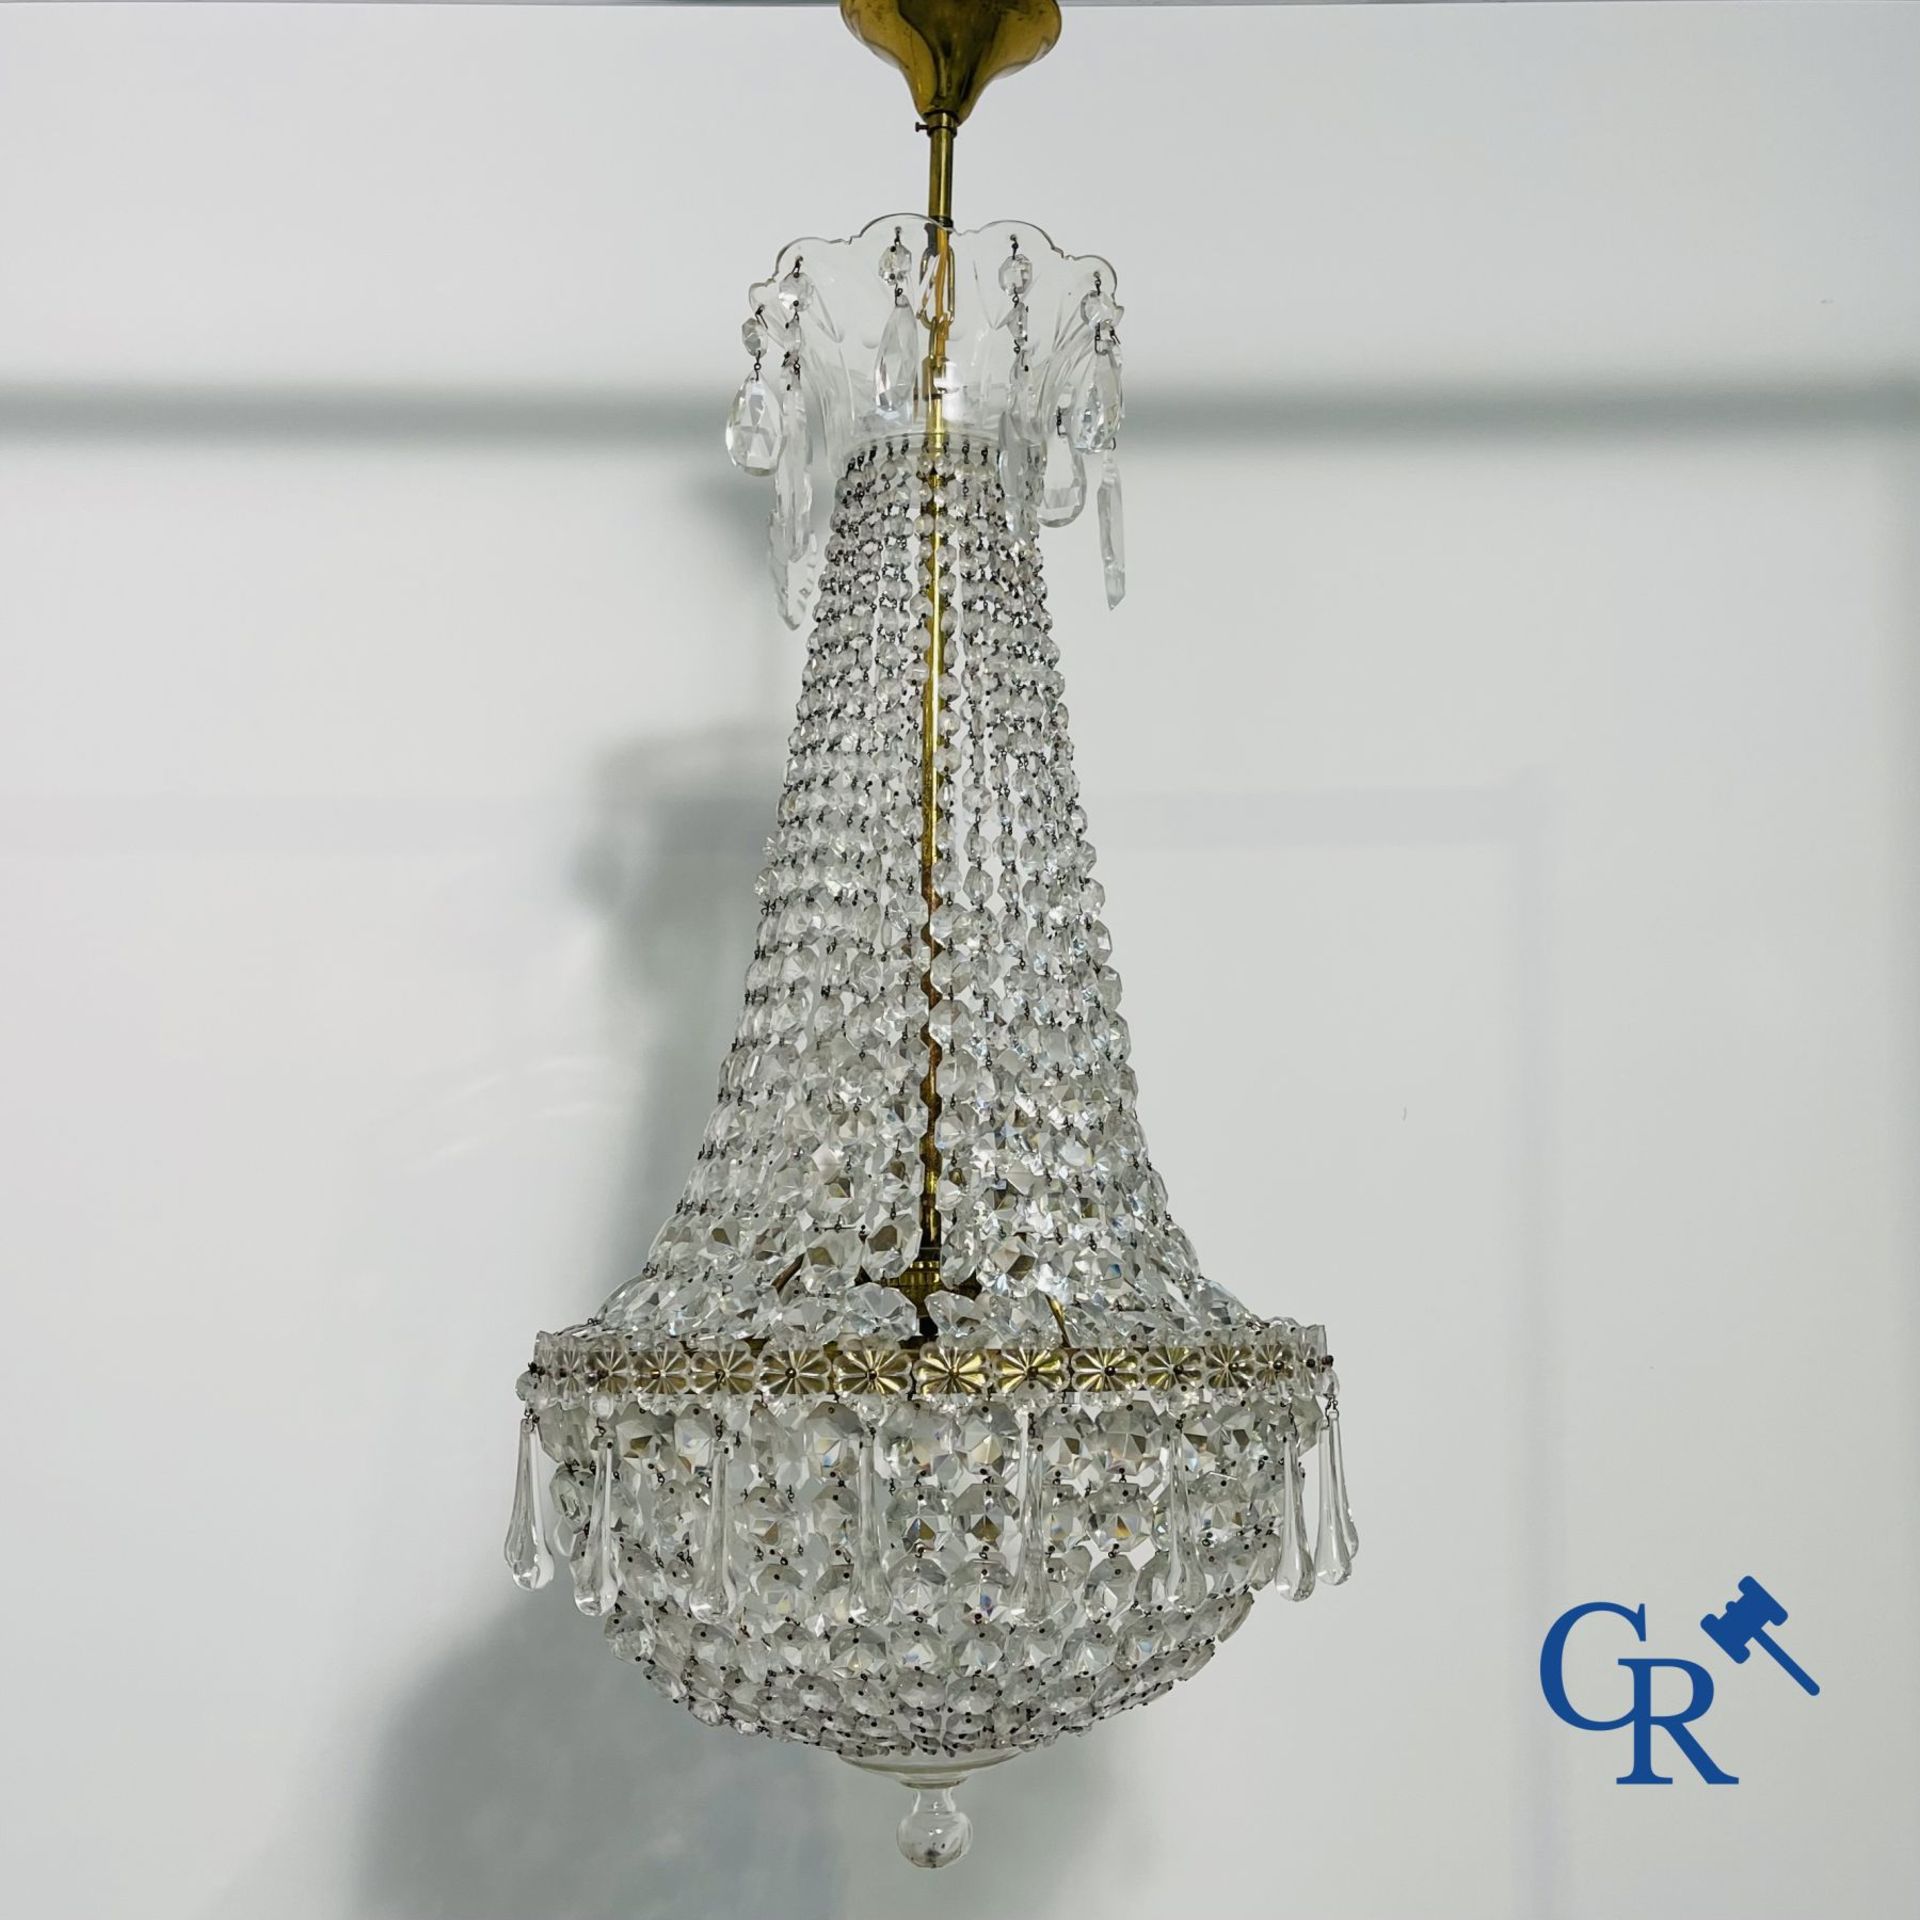 Chandelier: Beautiful Sac à pearles chandelier in crystal.